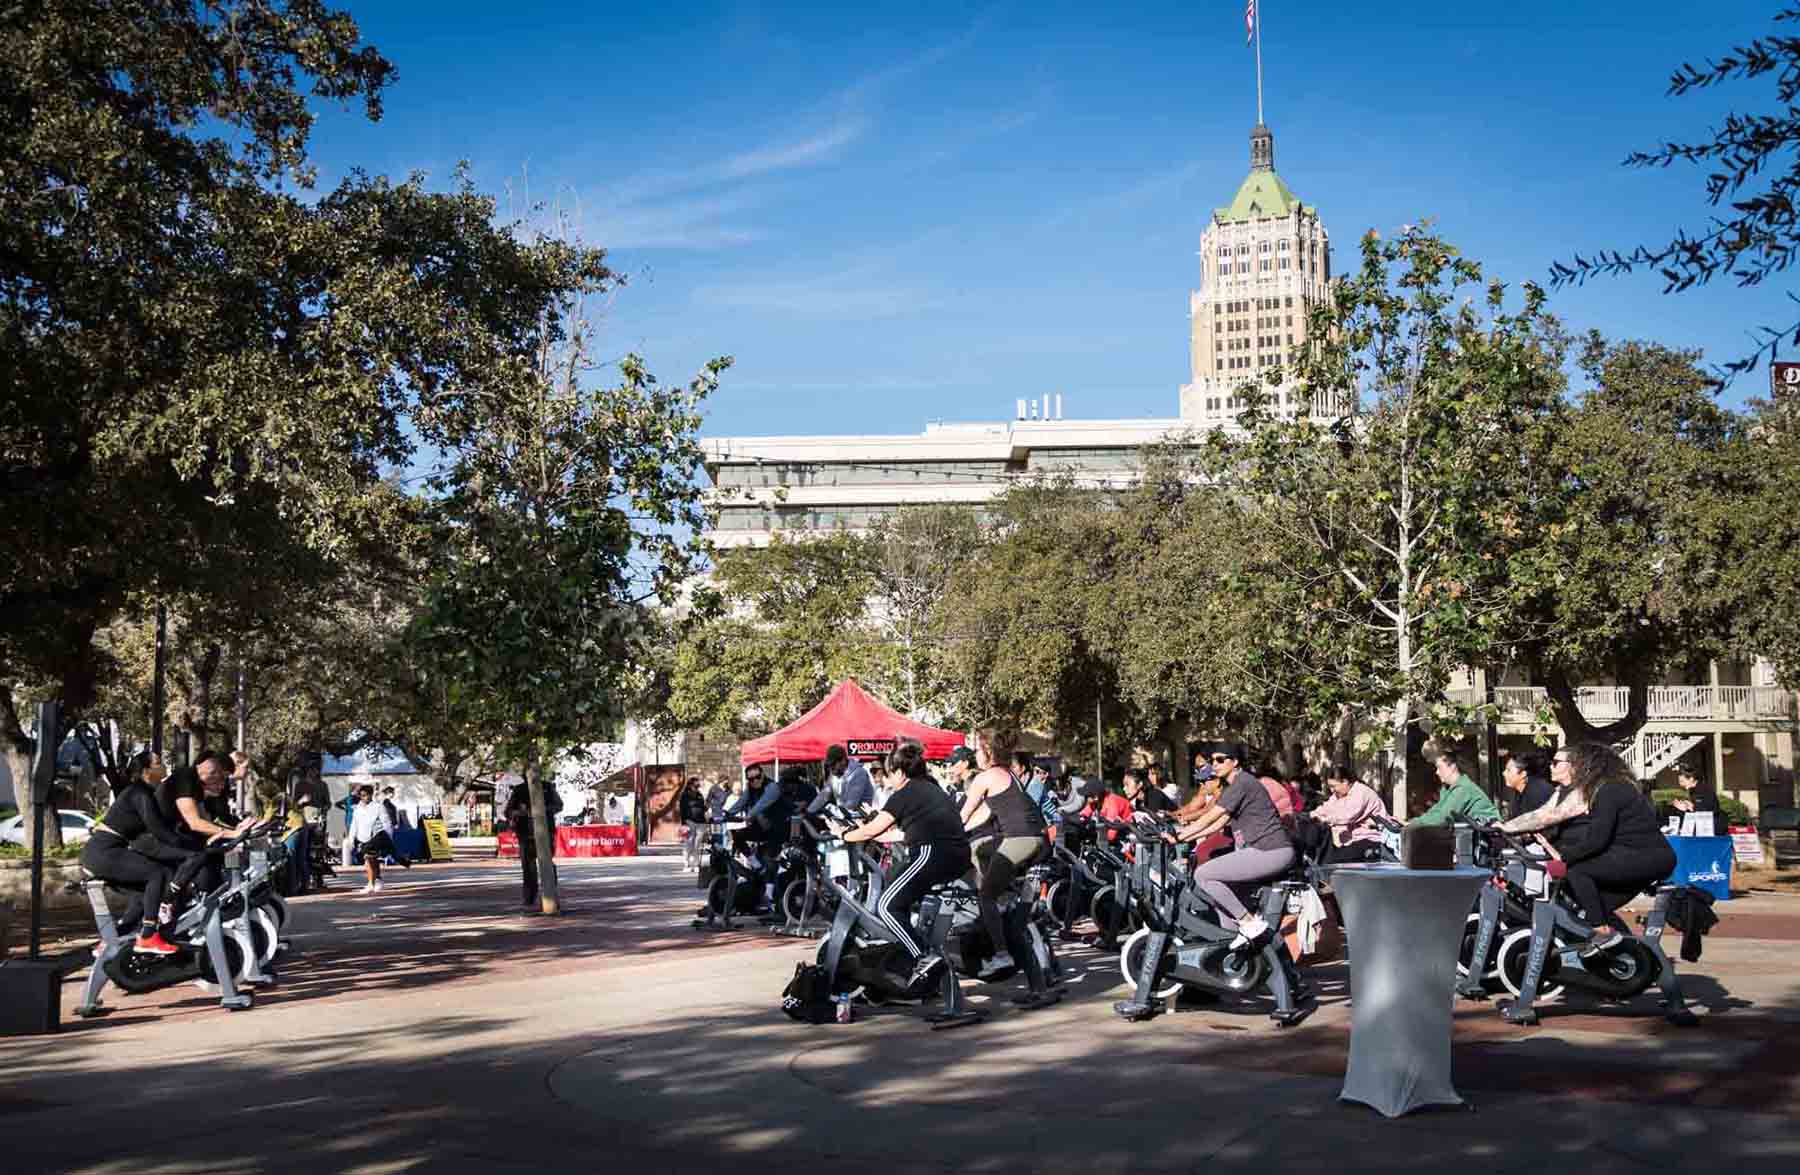 Group of people on stationery bikes in La Villita by San Antonio photographer, Kelly Williams